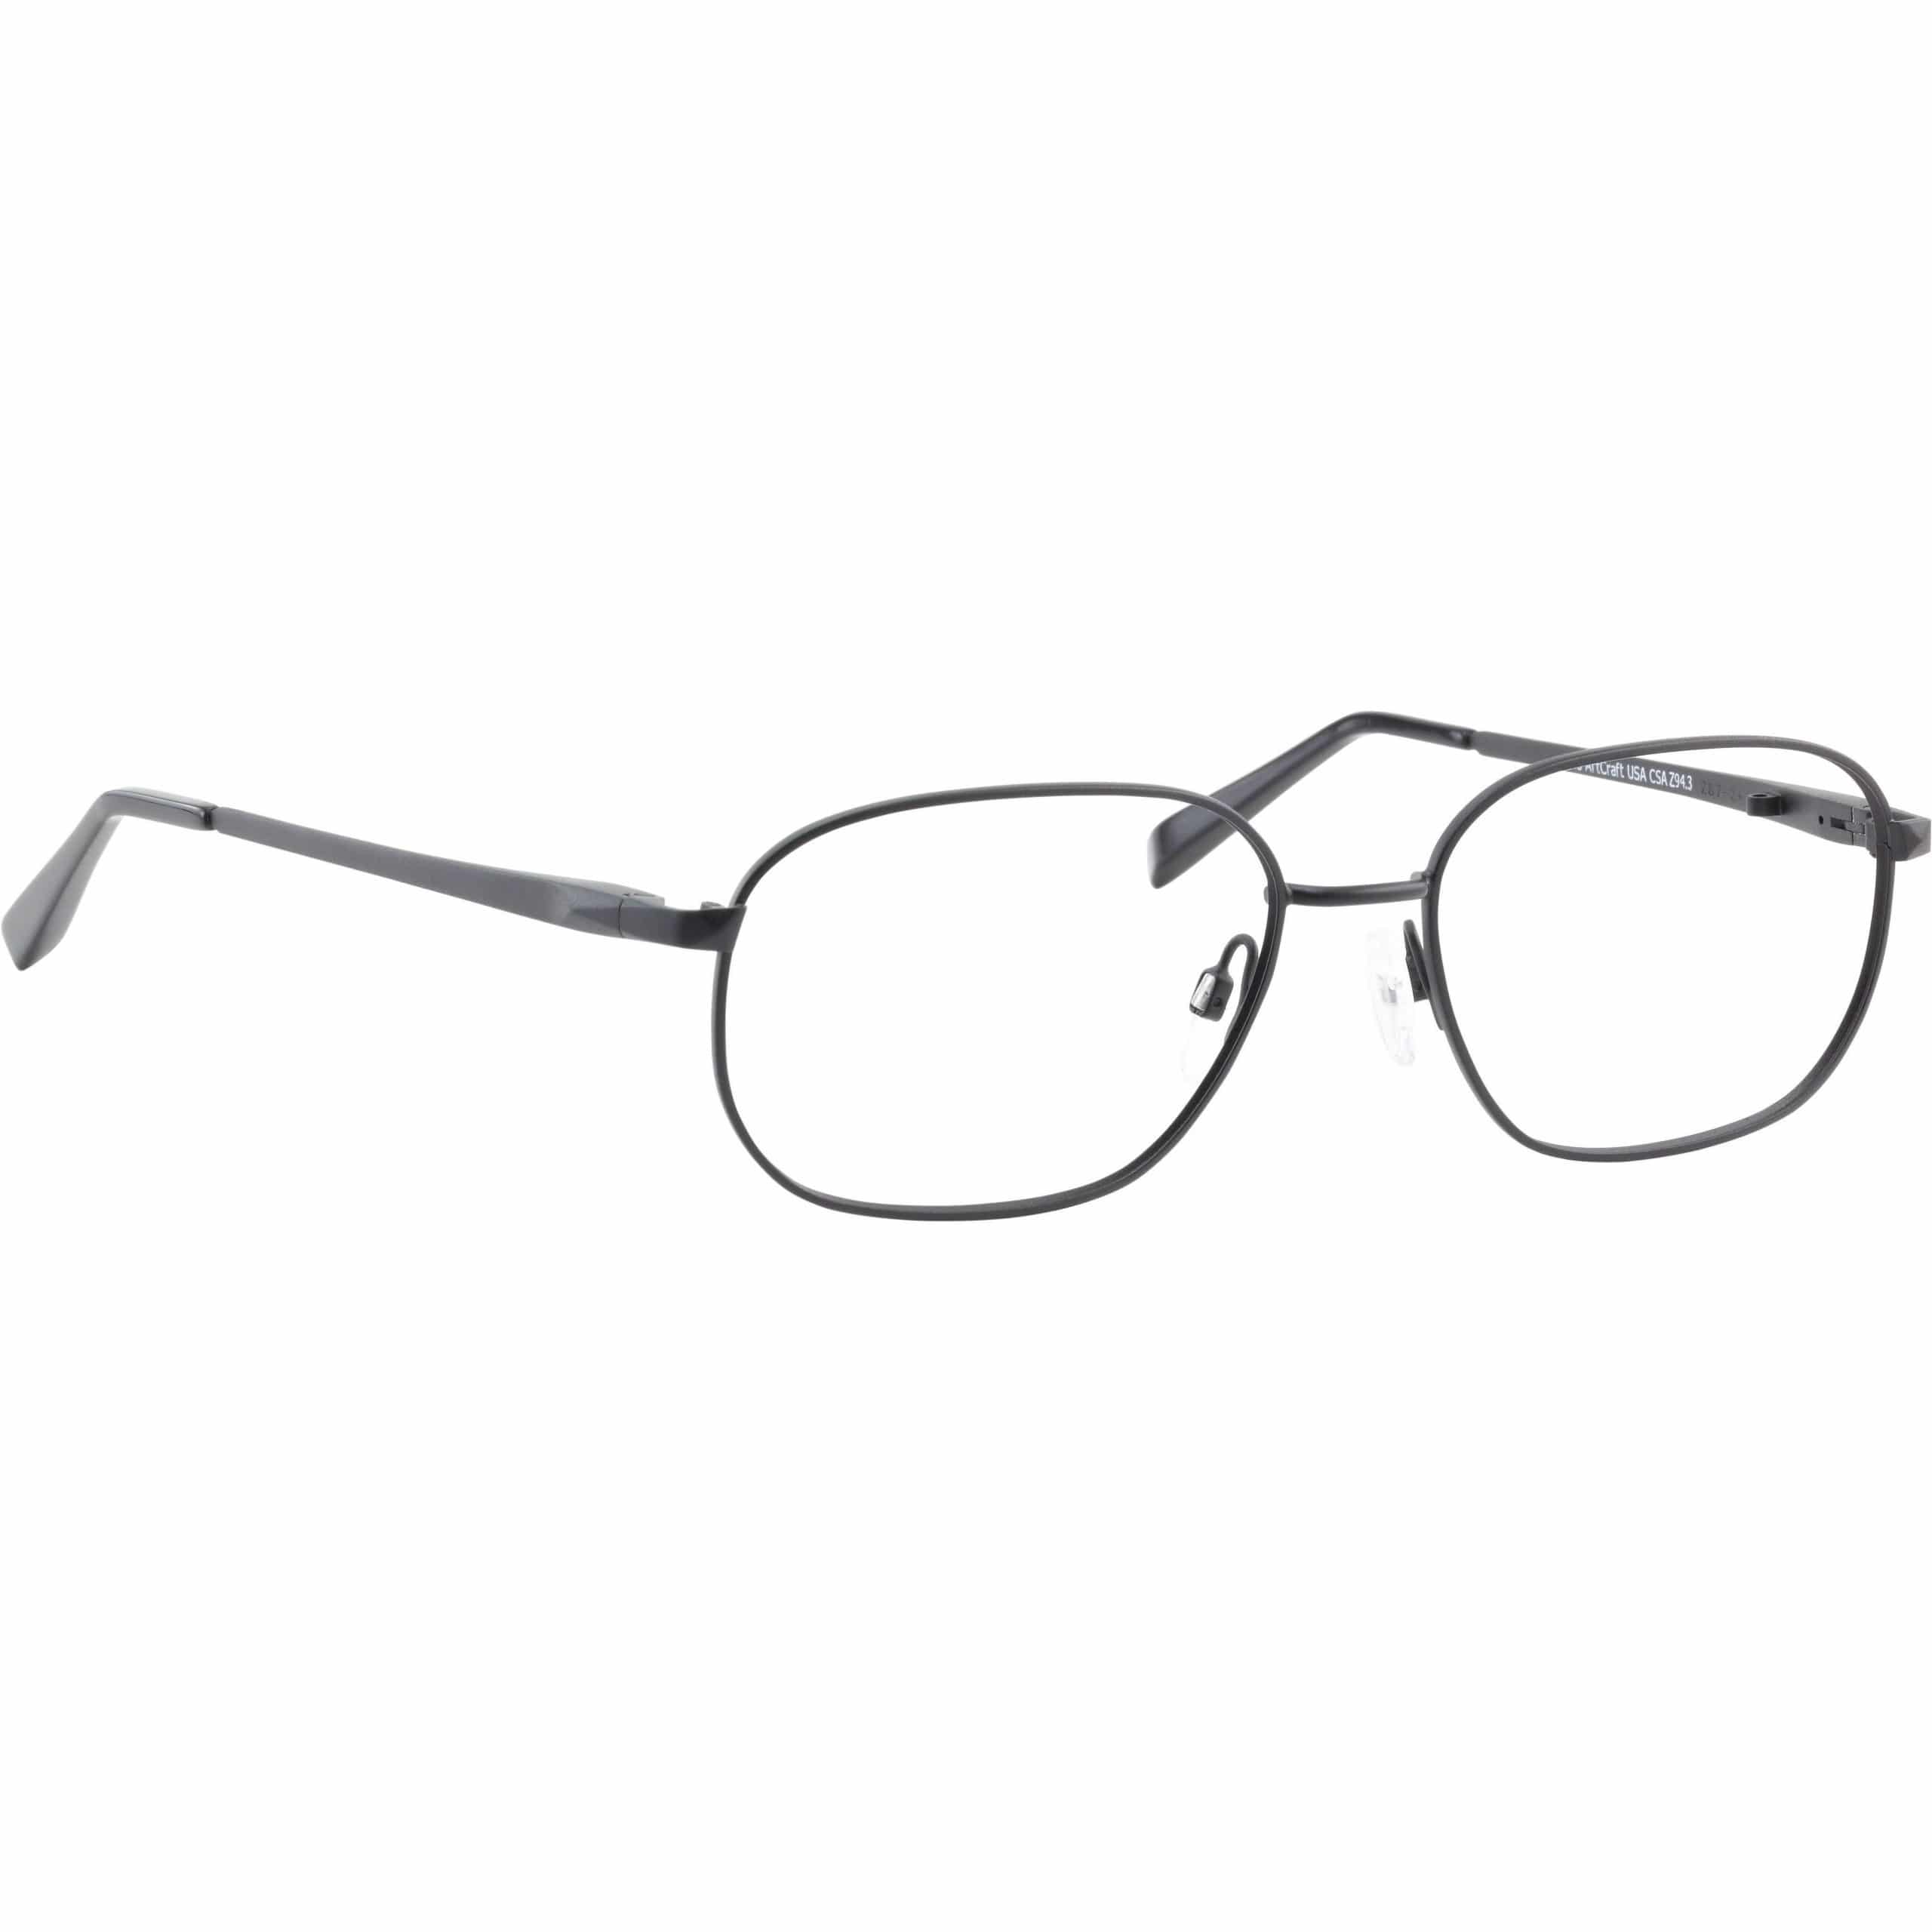 Art-Craft USA Workforce 432AM Eyeglasses - Safety Protection Glasses